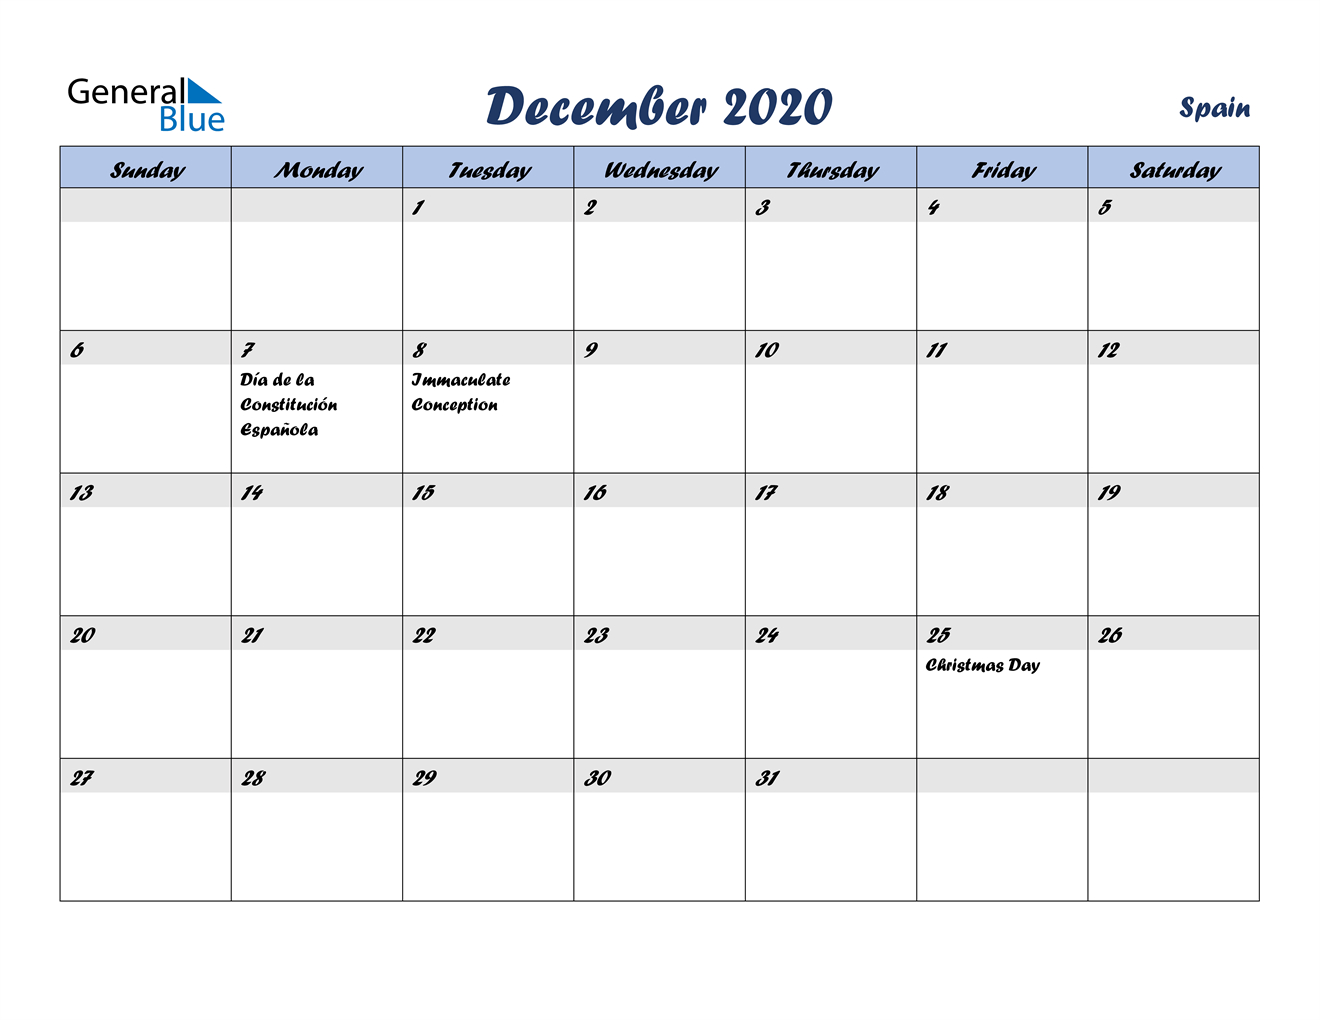 December 2020 Calendar - Spain